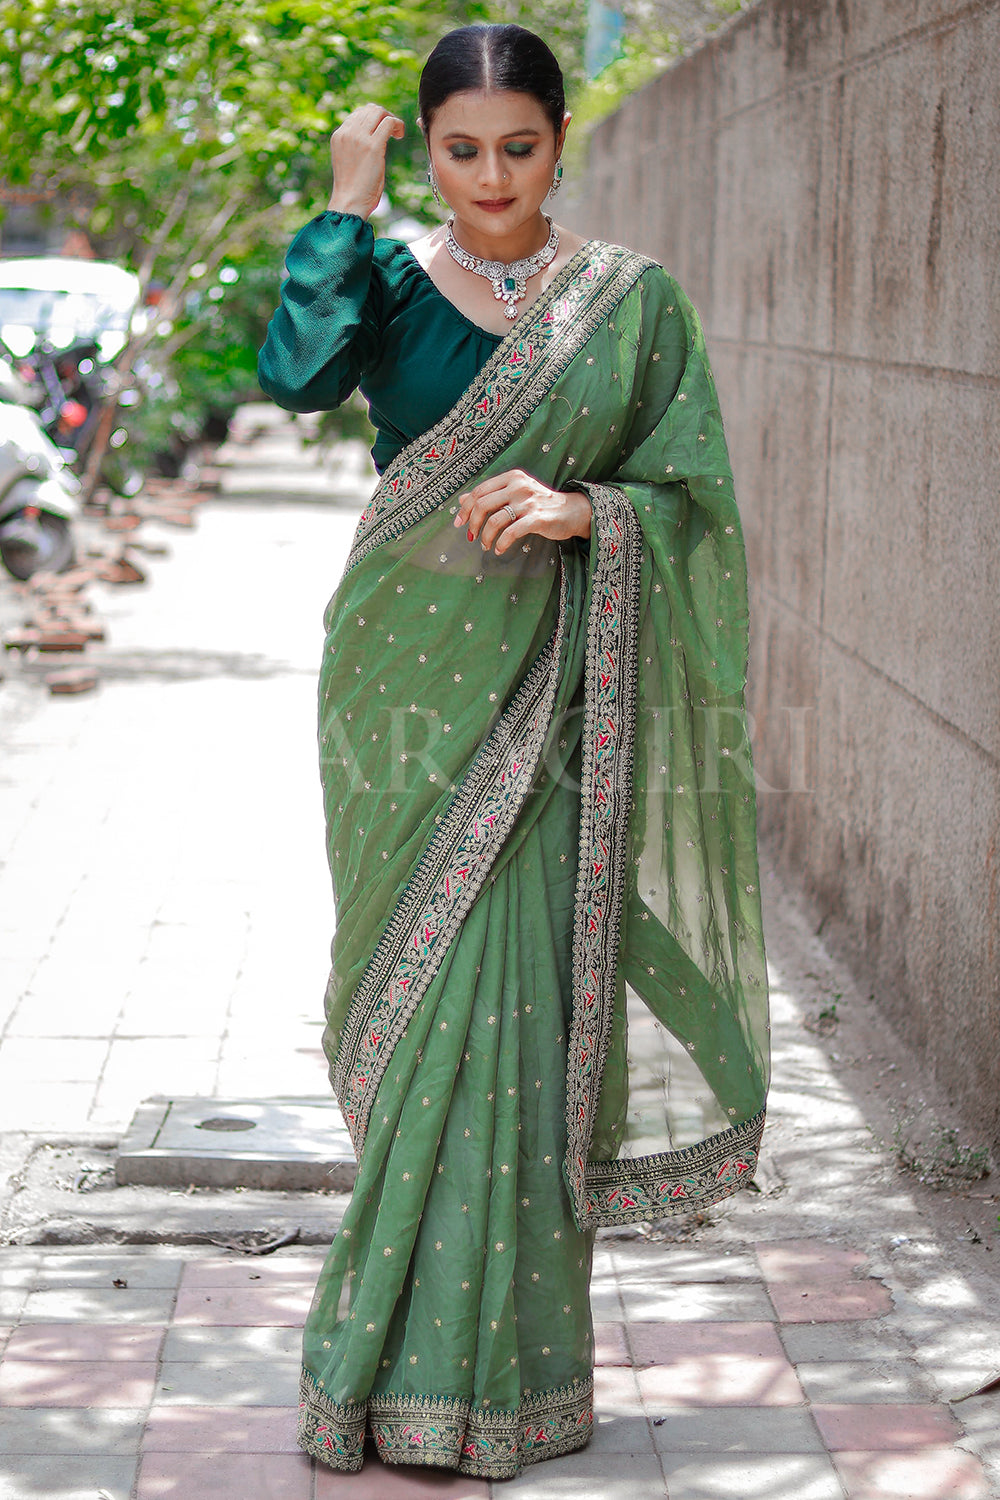 BHARGAVI CHIRMULEY in Emerald Green Organza Designer Saree